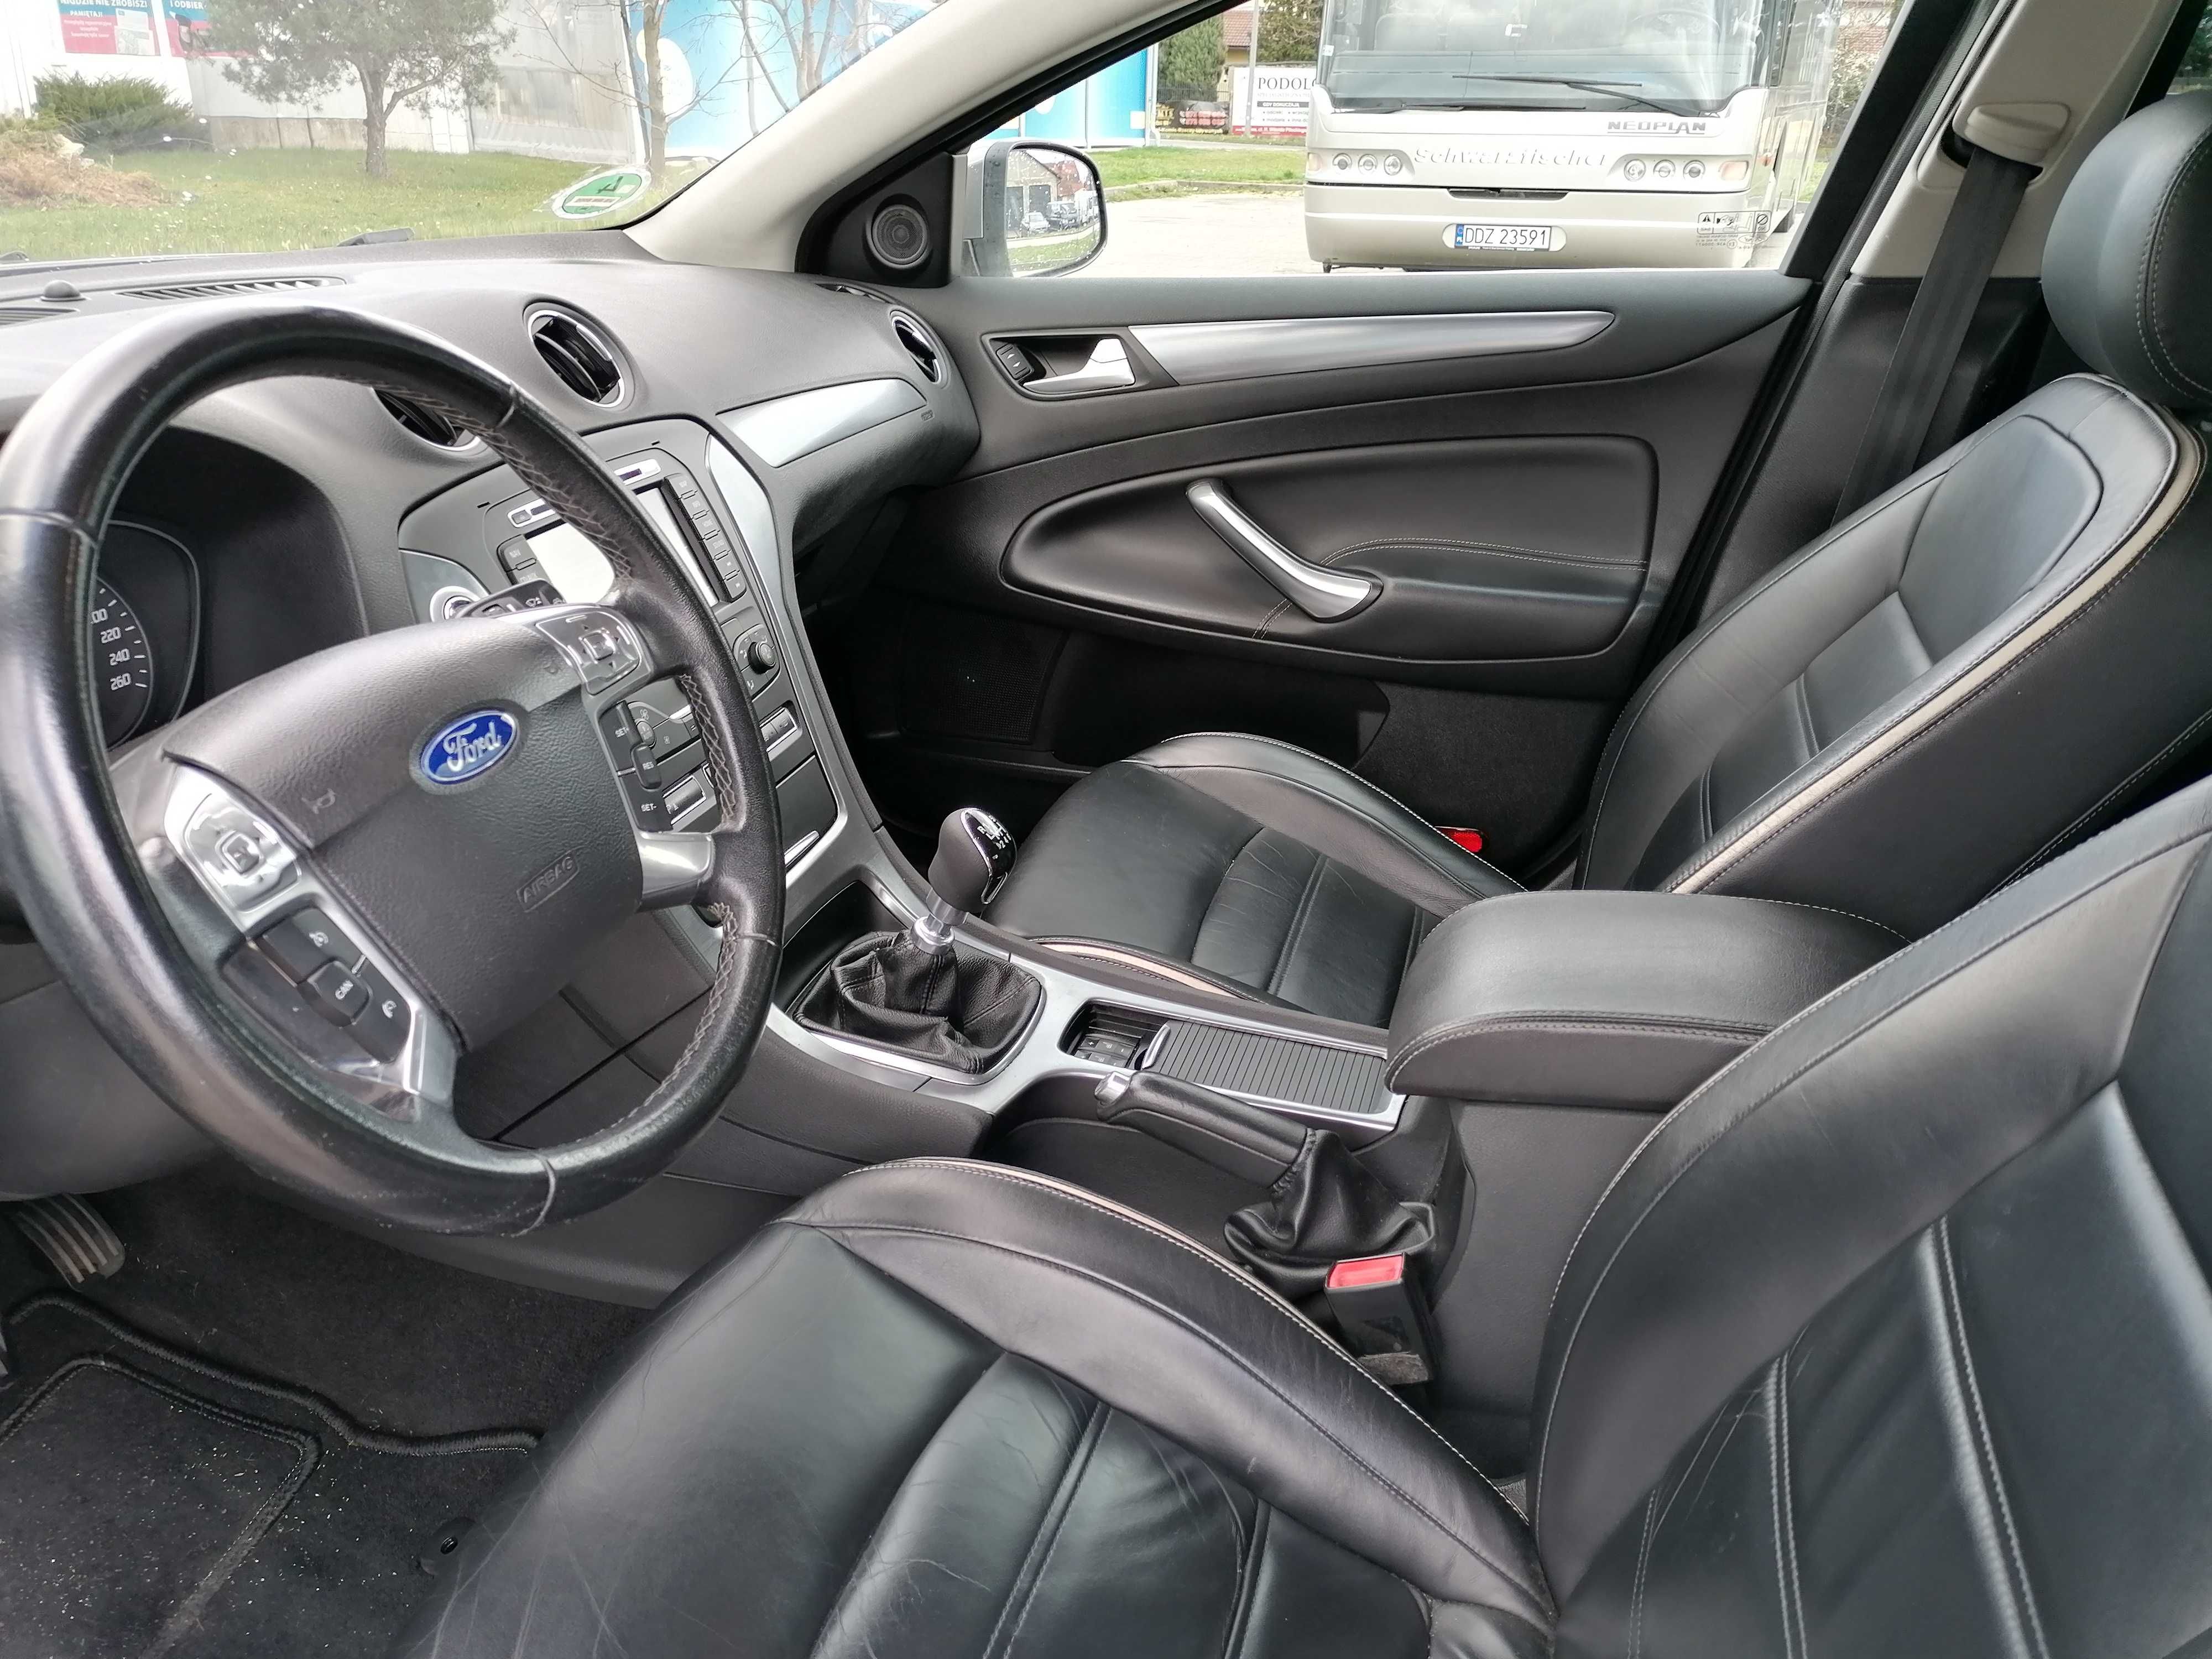 Ford Mondeo TITANIUM S 2.0 TDCI skóra, convers , alufelgi 18 cali